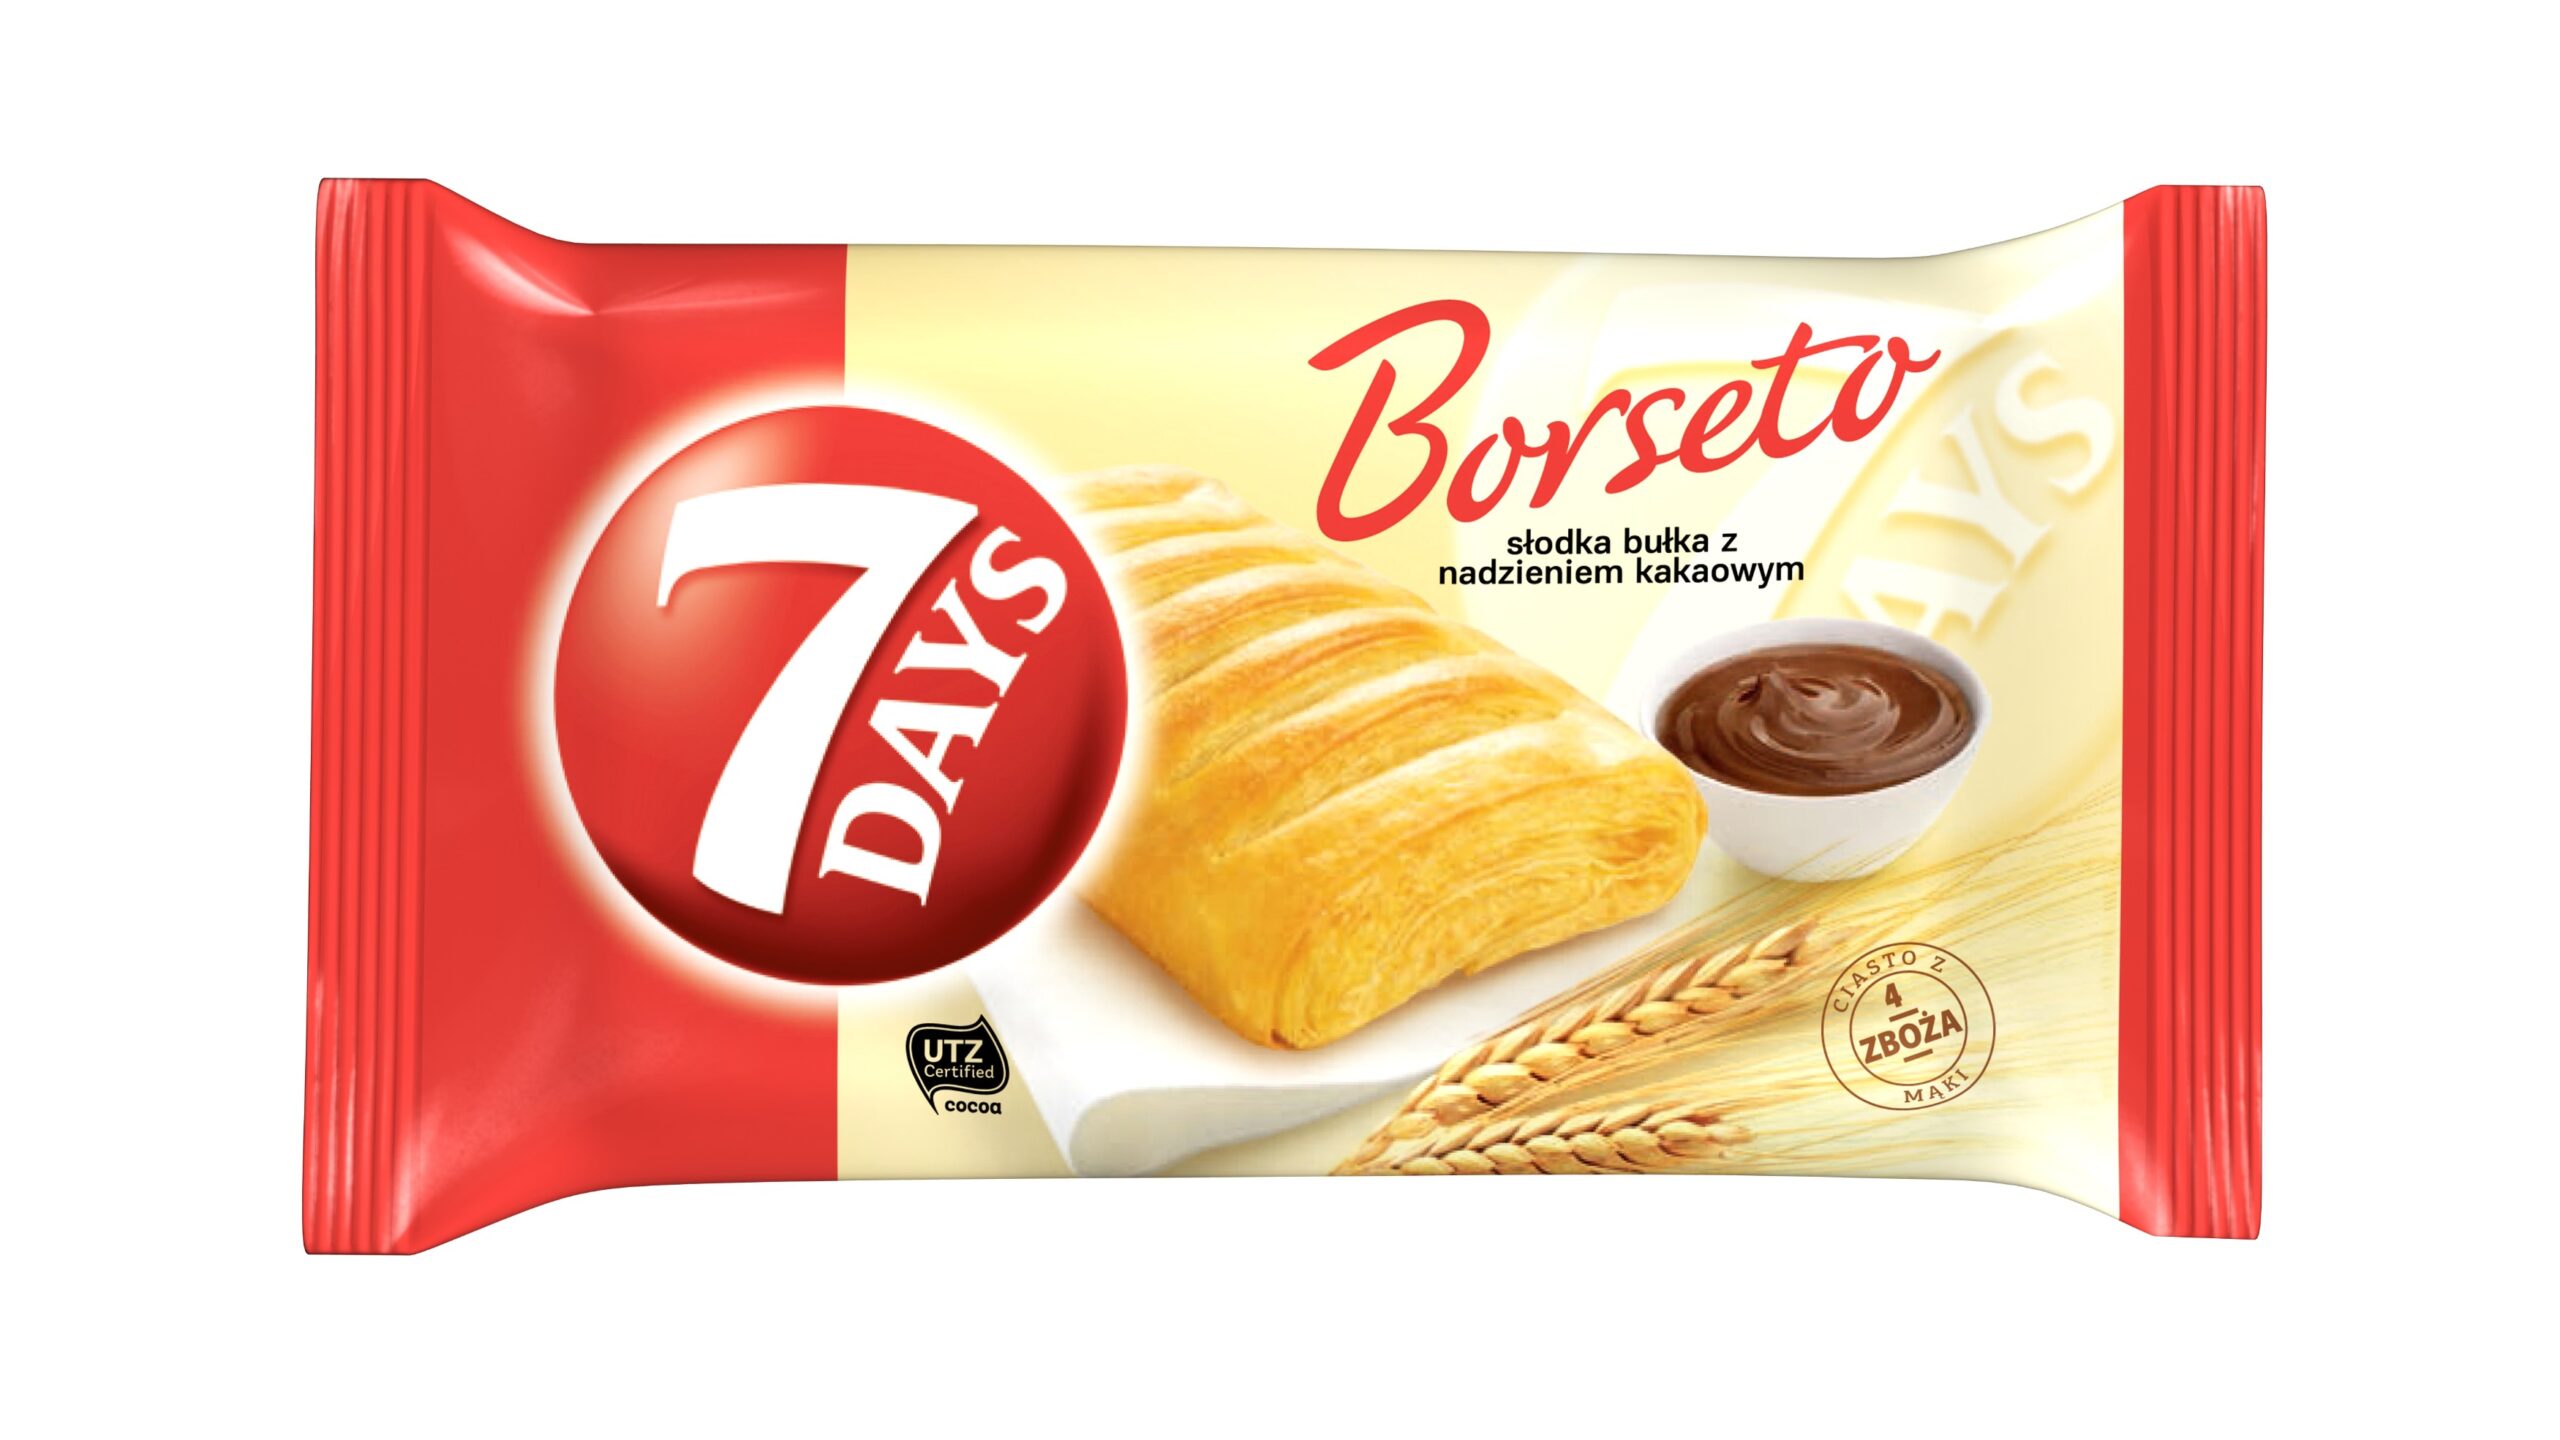 7 Days Borseto bułka o smaku kakaowym 80g